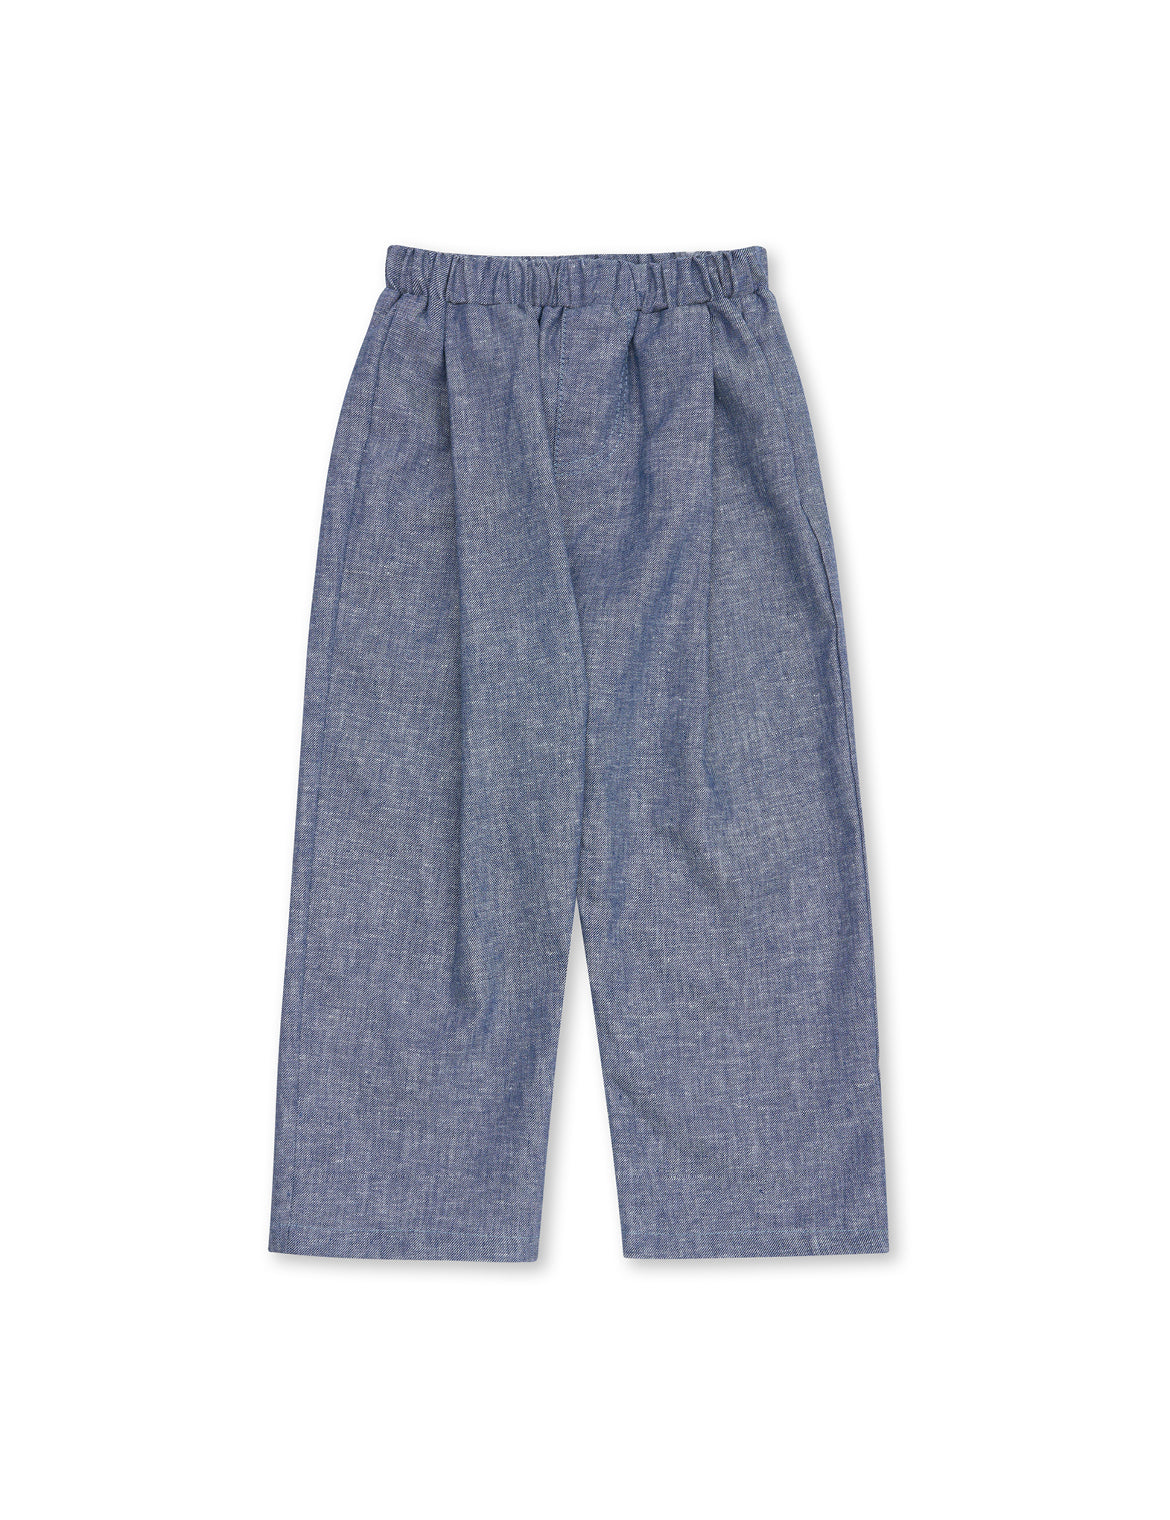 Boys' Designer Pants, Denim, ages 1 to 6.